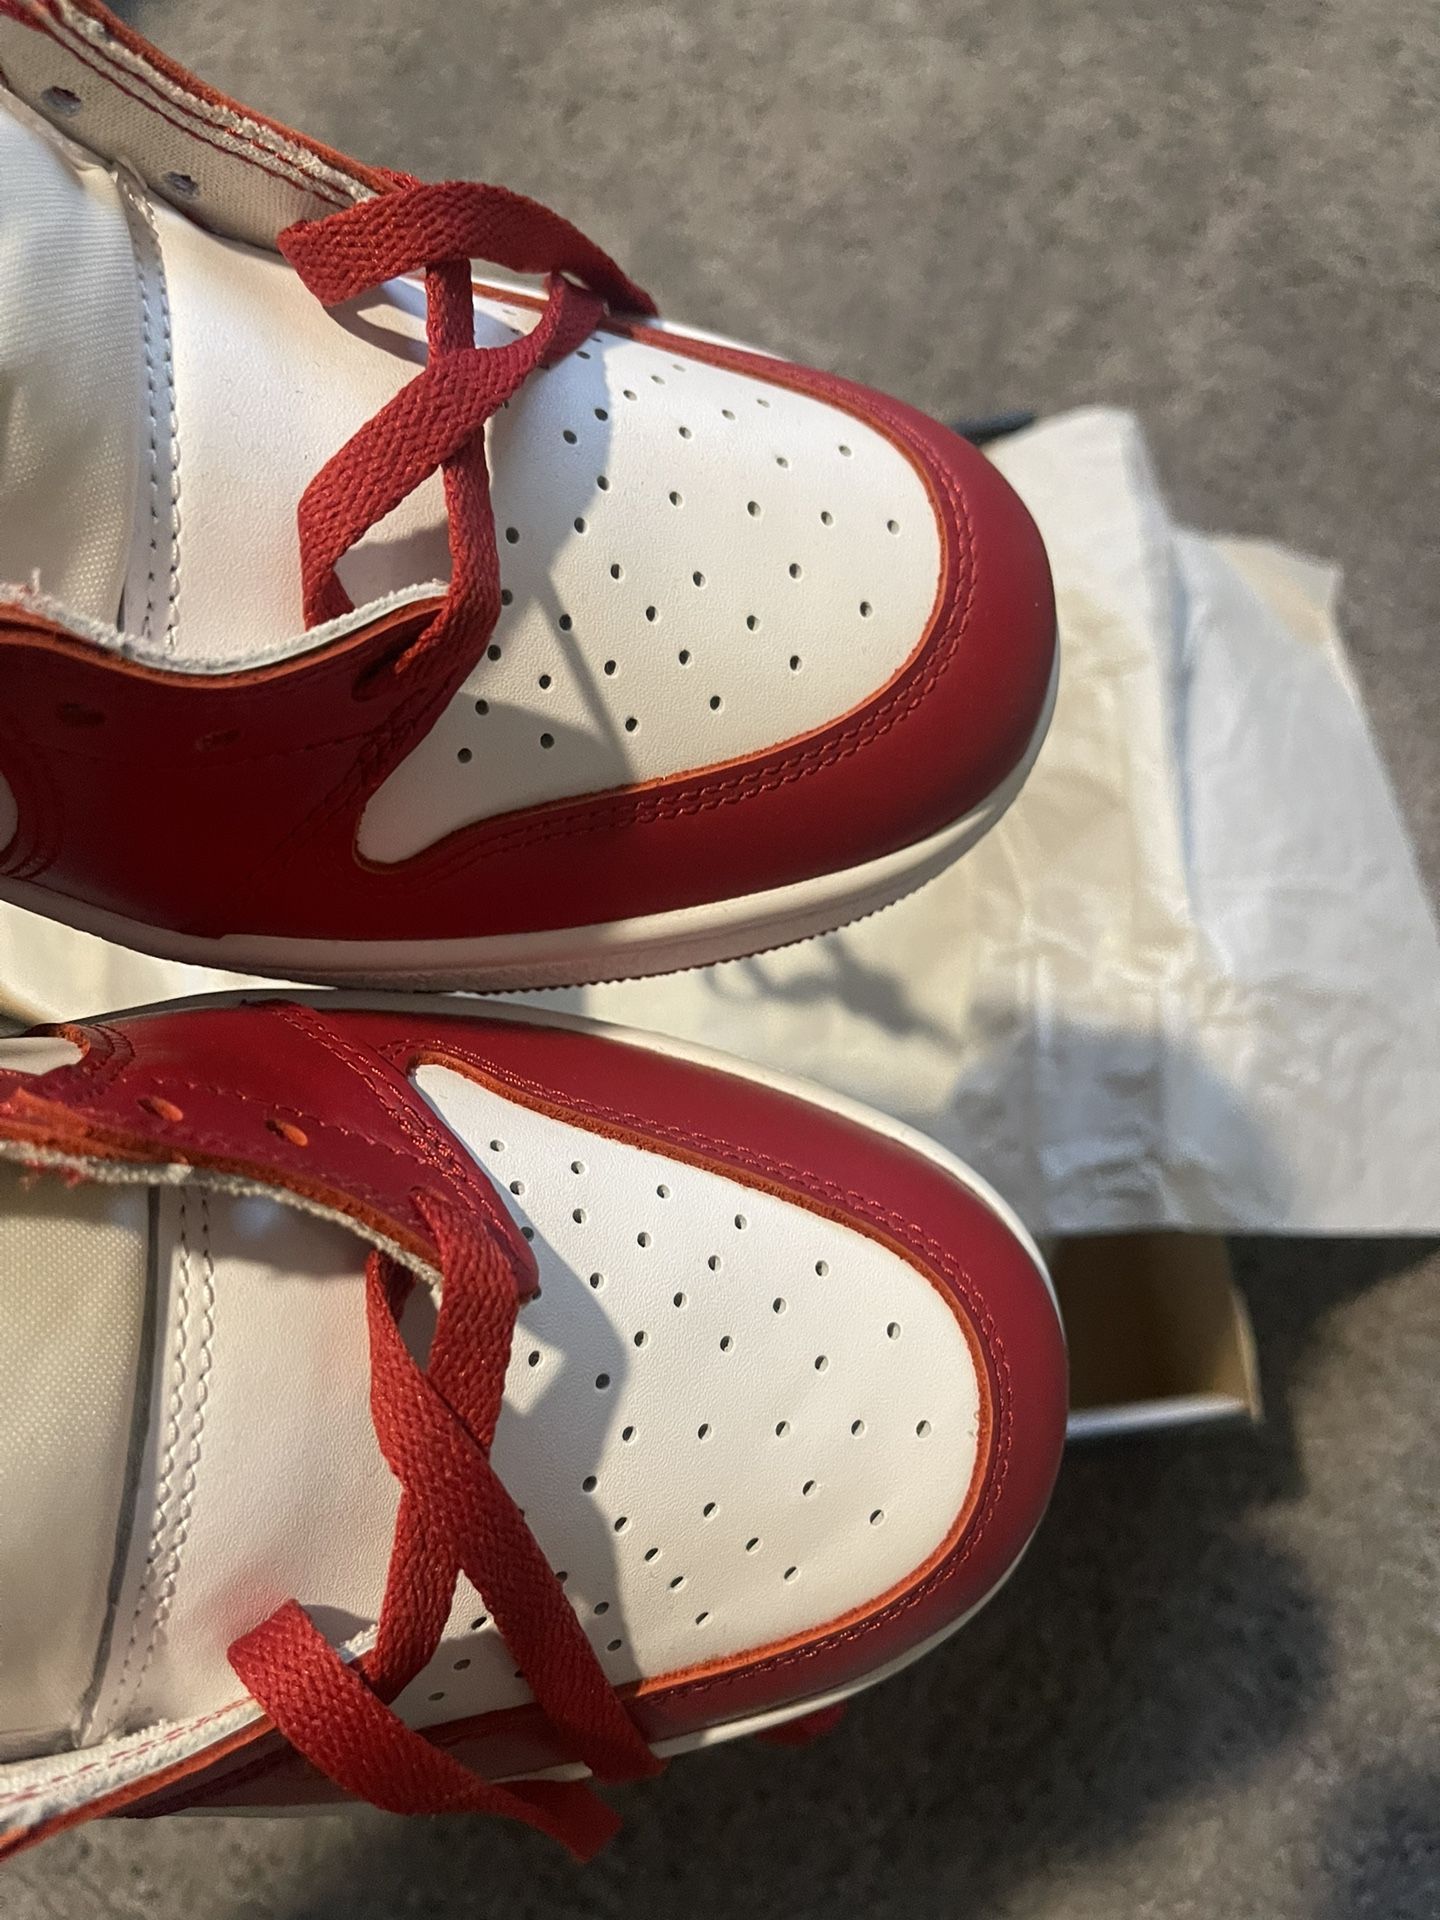 Custom Jordan 13s for Sale in Gilbert, AZ - OfferUp